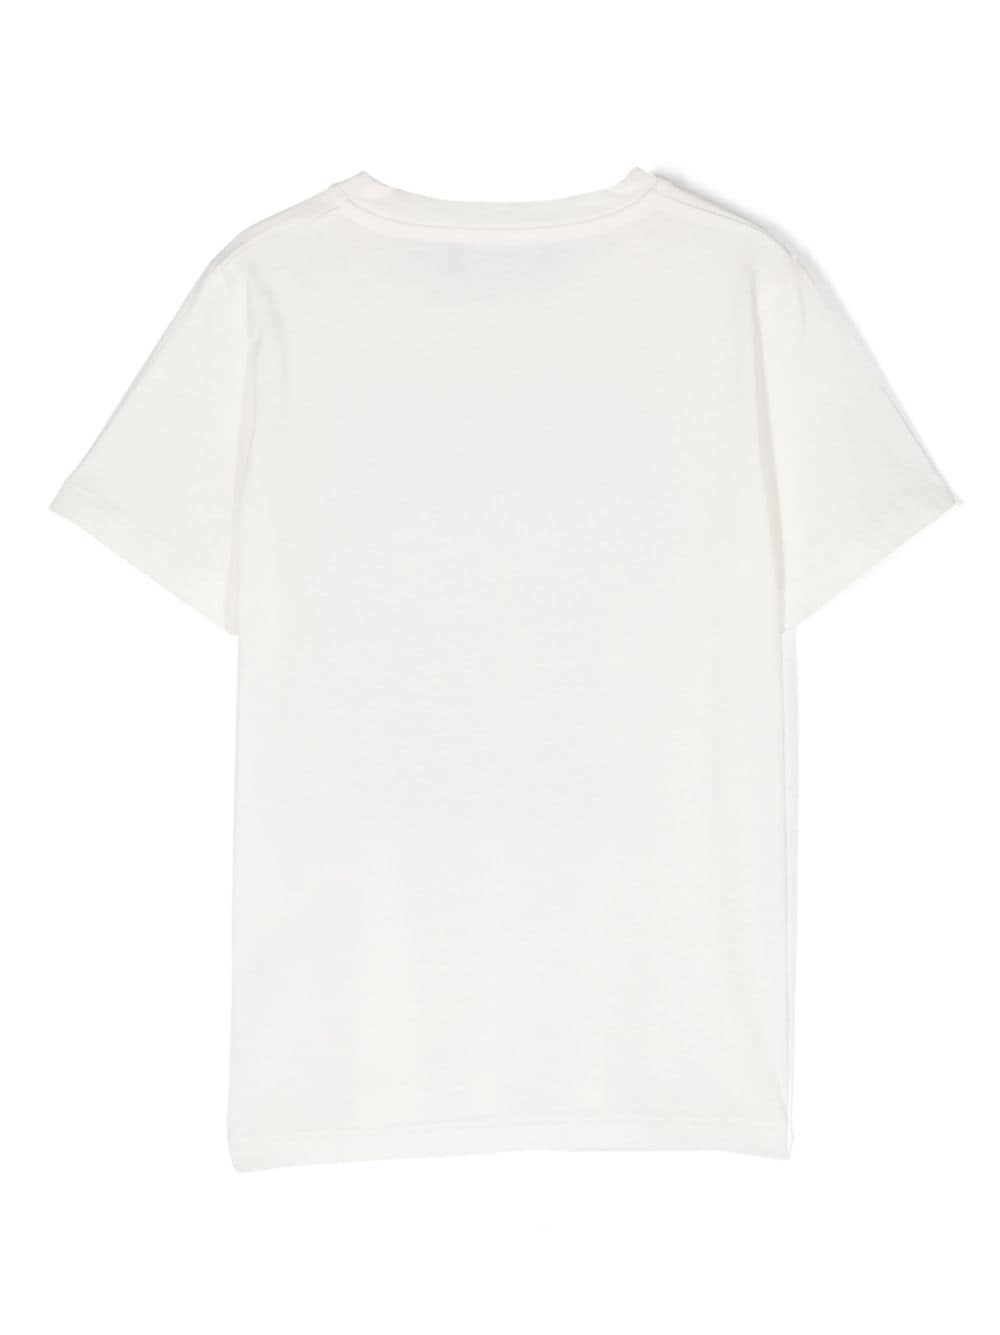 T-shirt in cotone con stampa logo - Rubino Kids